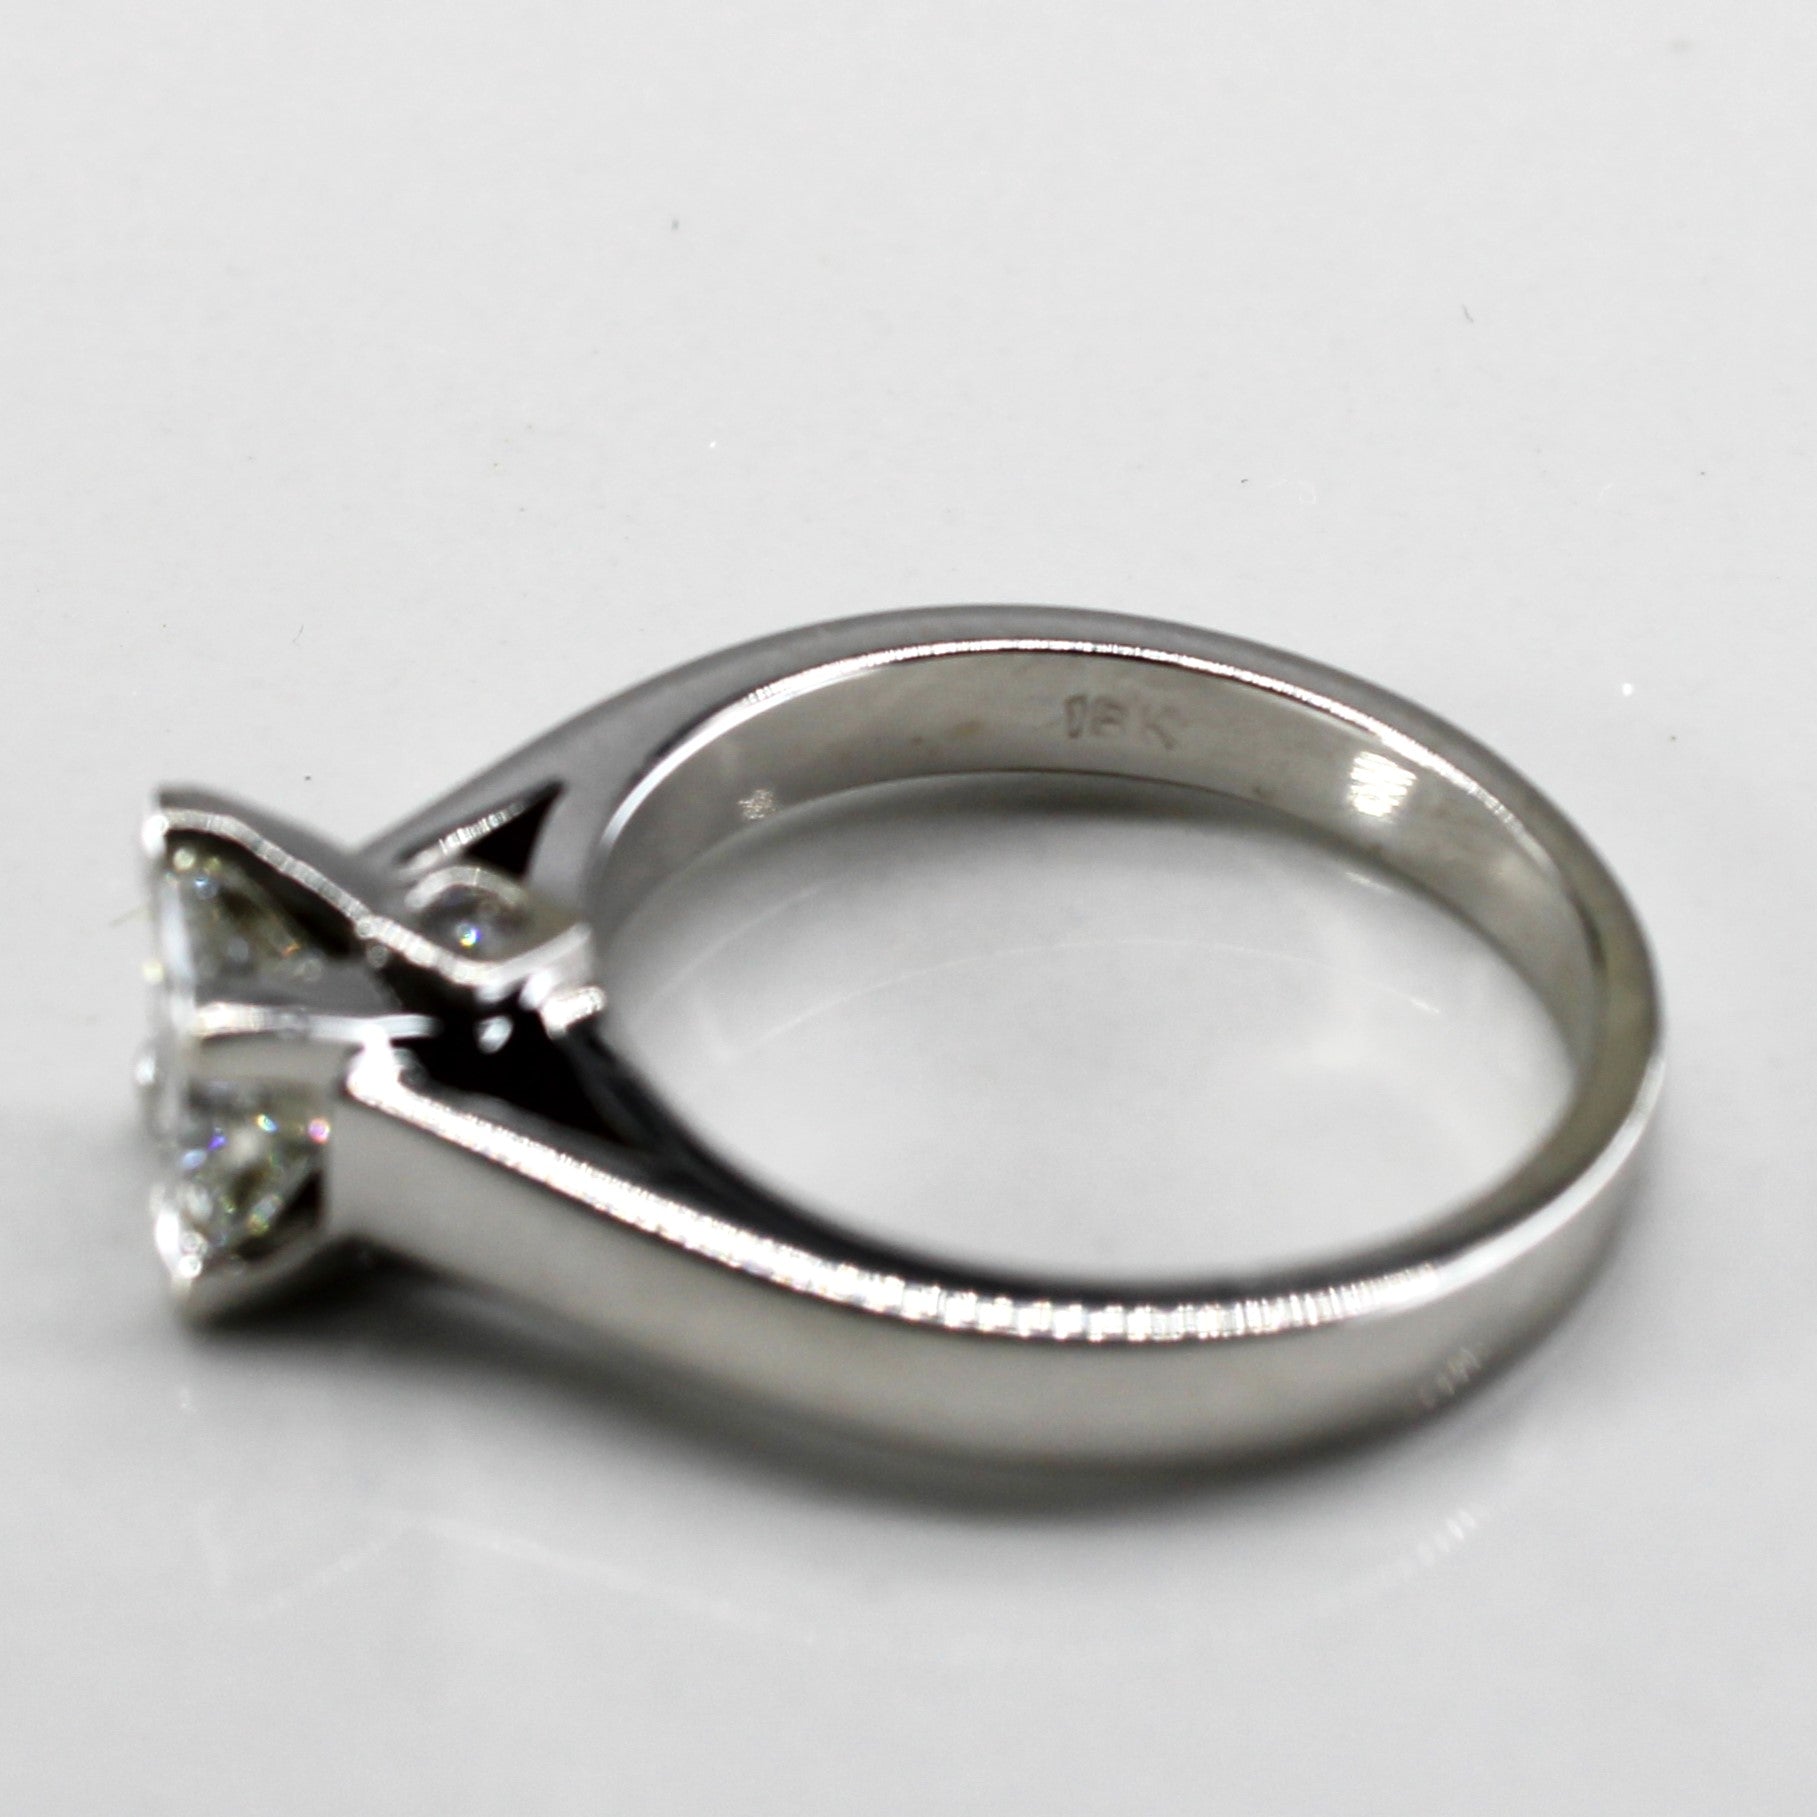 Princess Solitaire 18K Ring with Hidden Diamonds | 0.71 ctw, 0.08 ctw | SZ 4.5 |